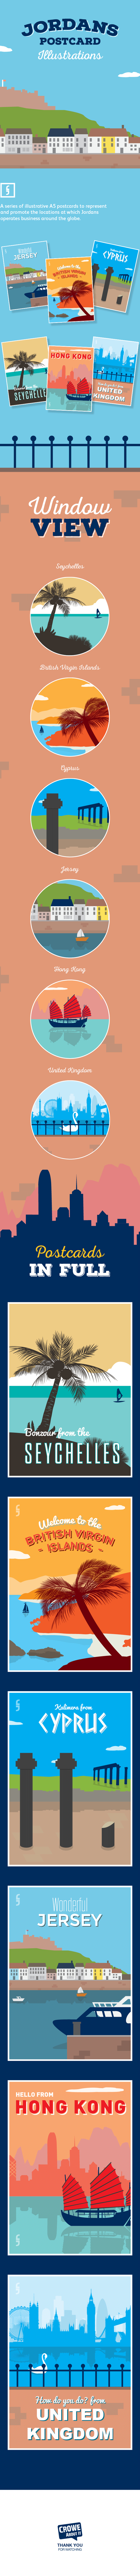 Jordans postcards illustrations 2D flat colour a5 Window Seychelles jersey United Kingdom Hong Kong british virgin islands BVI cyprus